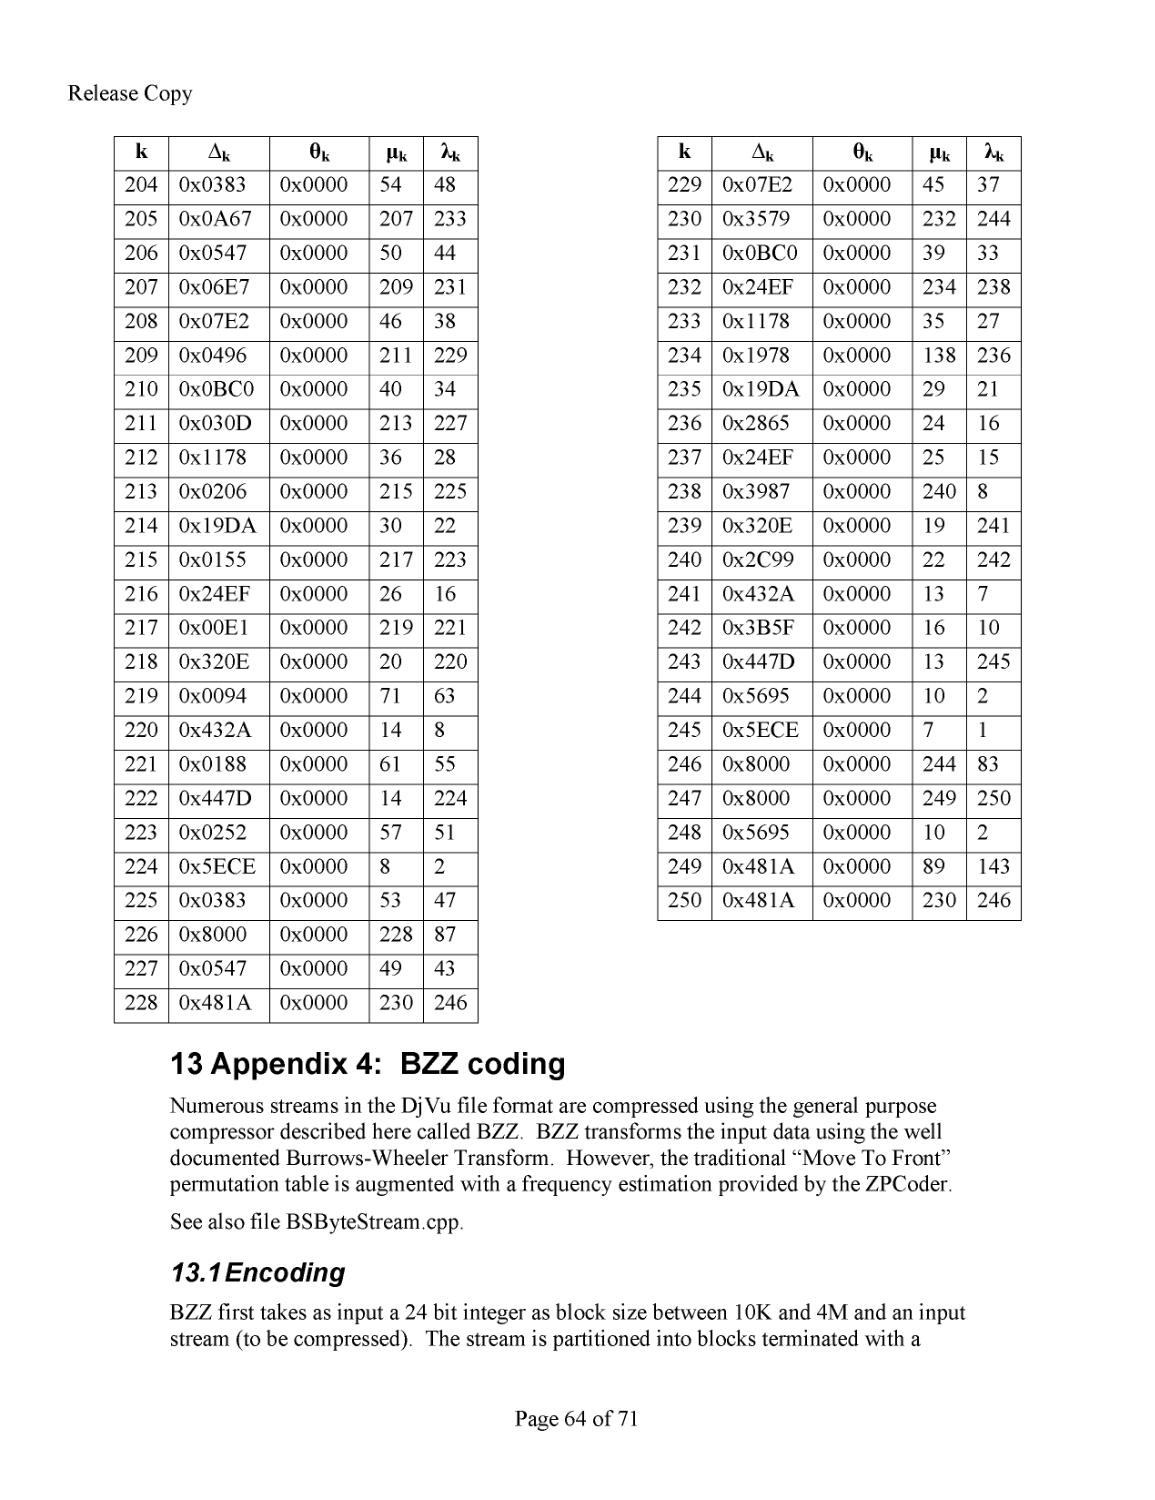 Appendix 4:  BZZ coding